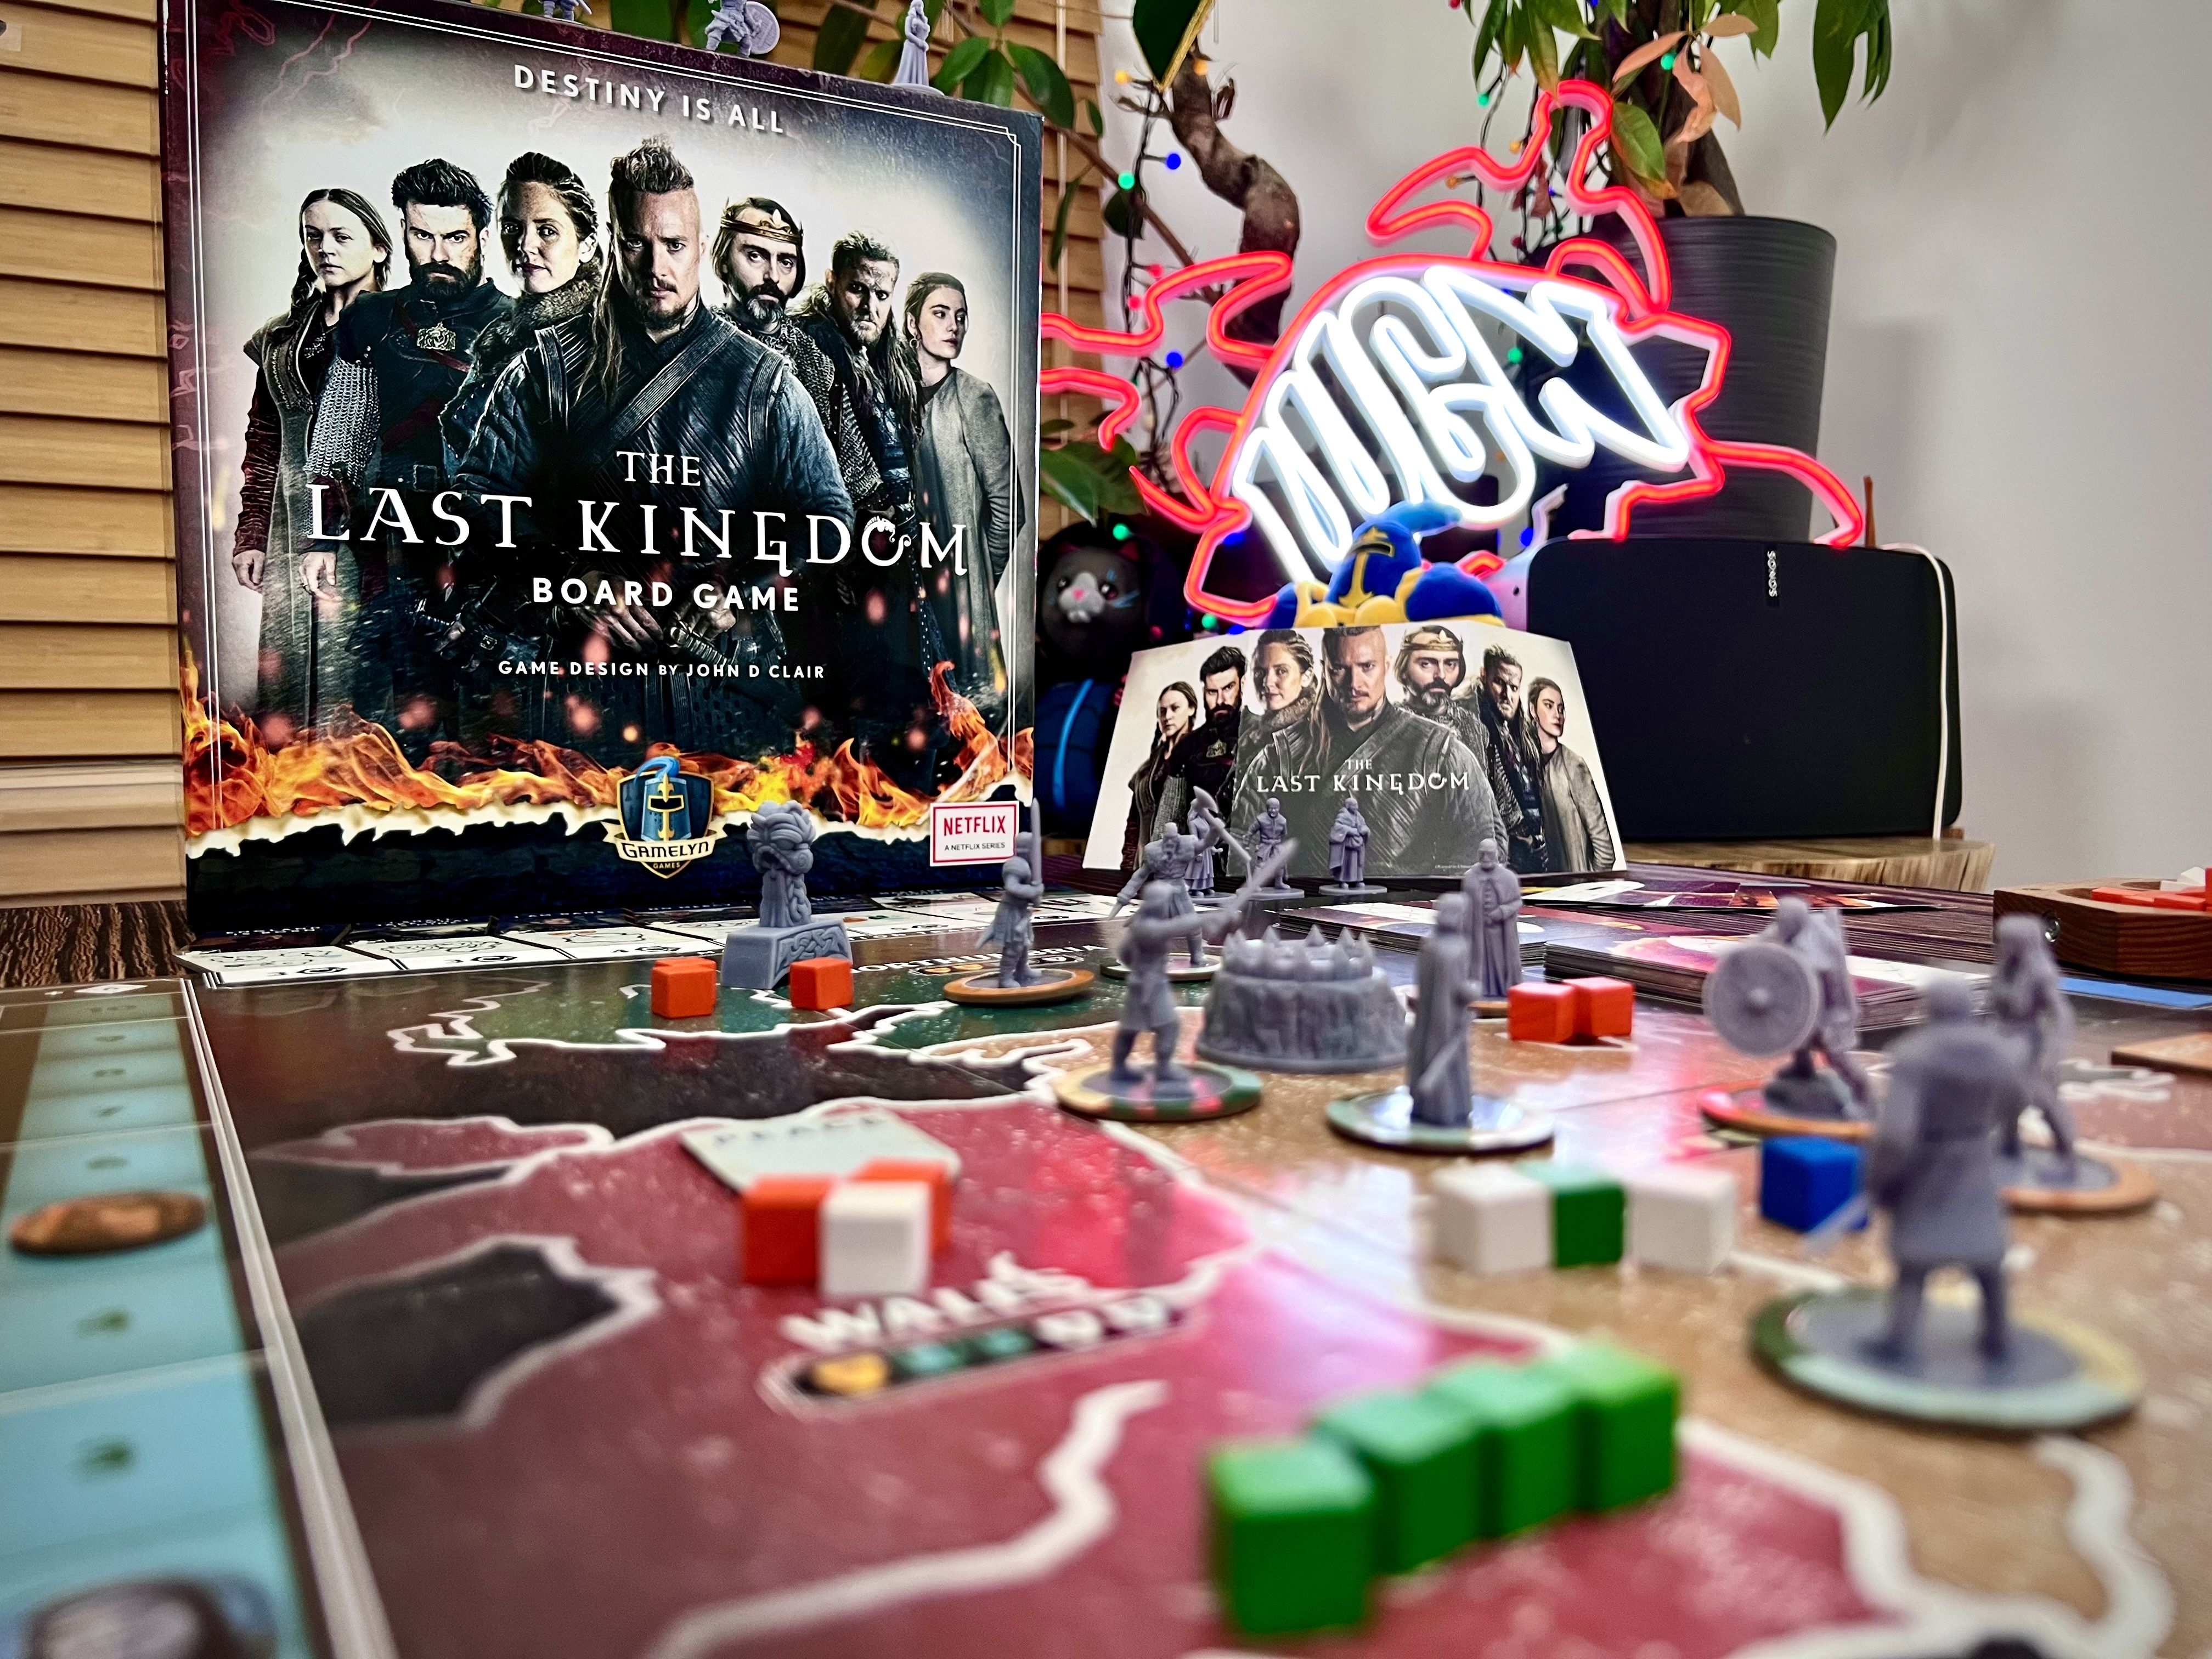 The Last Kingdom Board Game - DESTINY IS ALL.